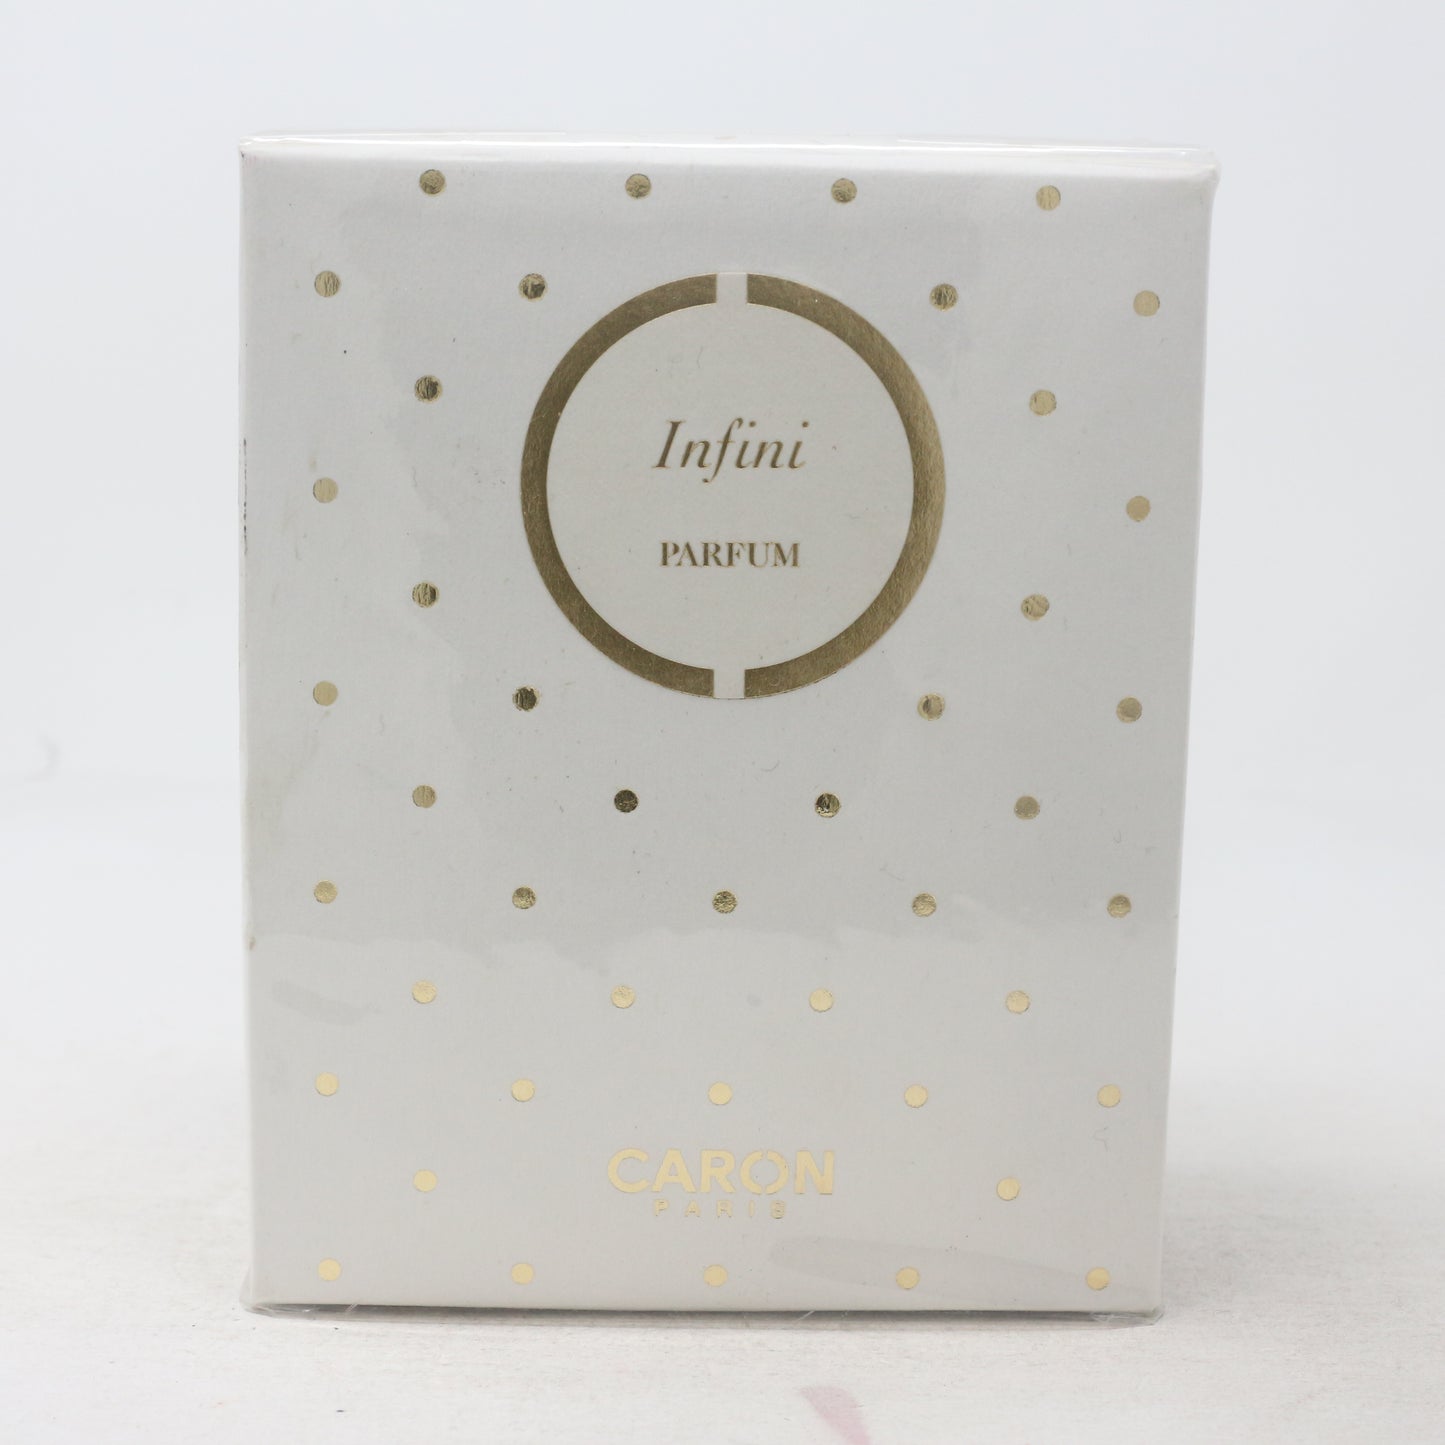 Caron Infini Parfum 0.5oz/15ml New In Box